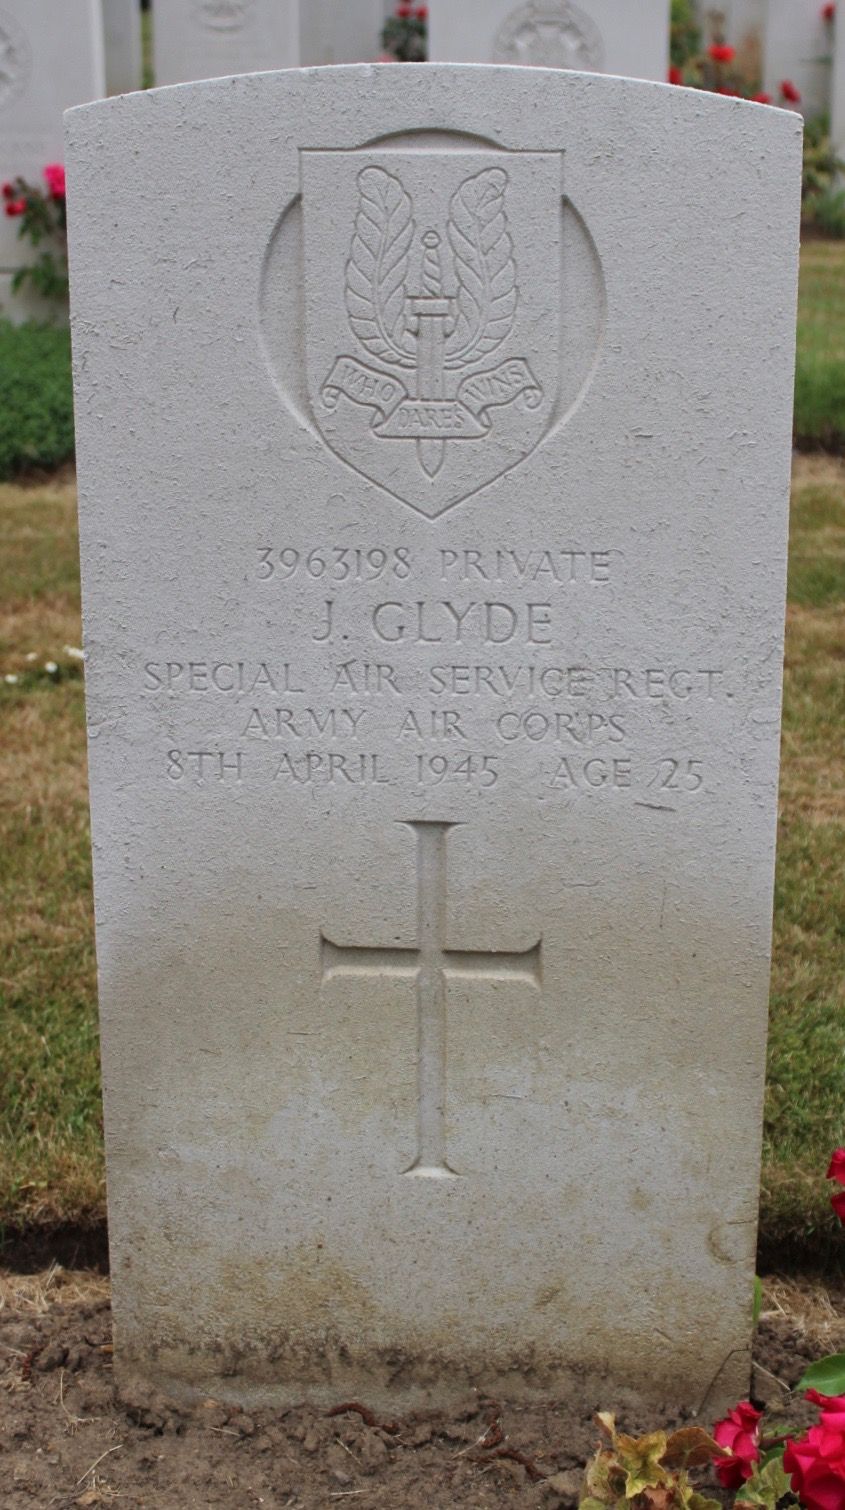 J. Glyde (Grave)